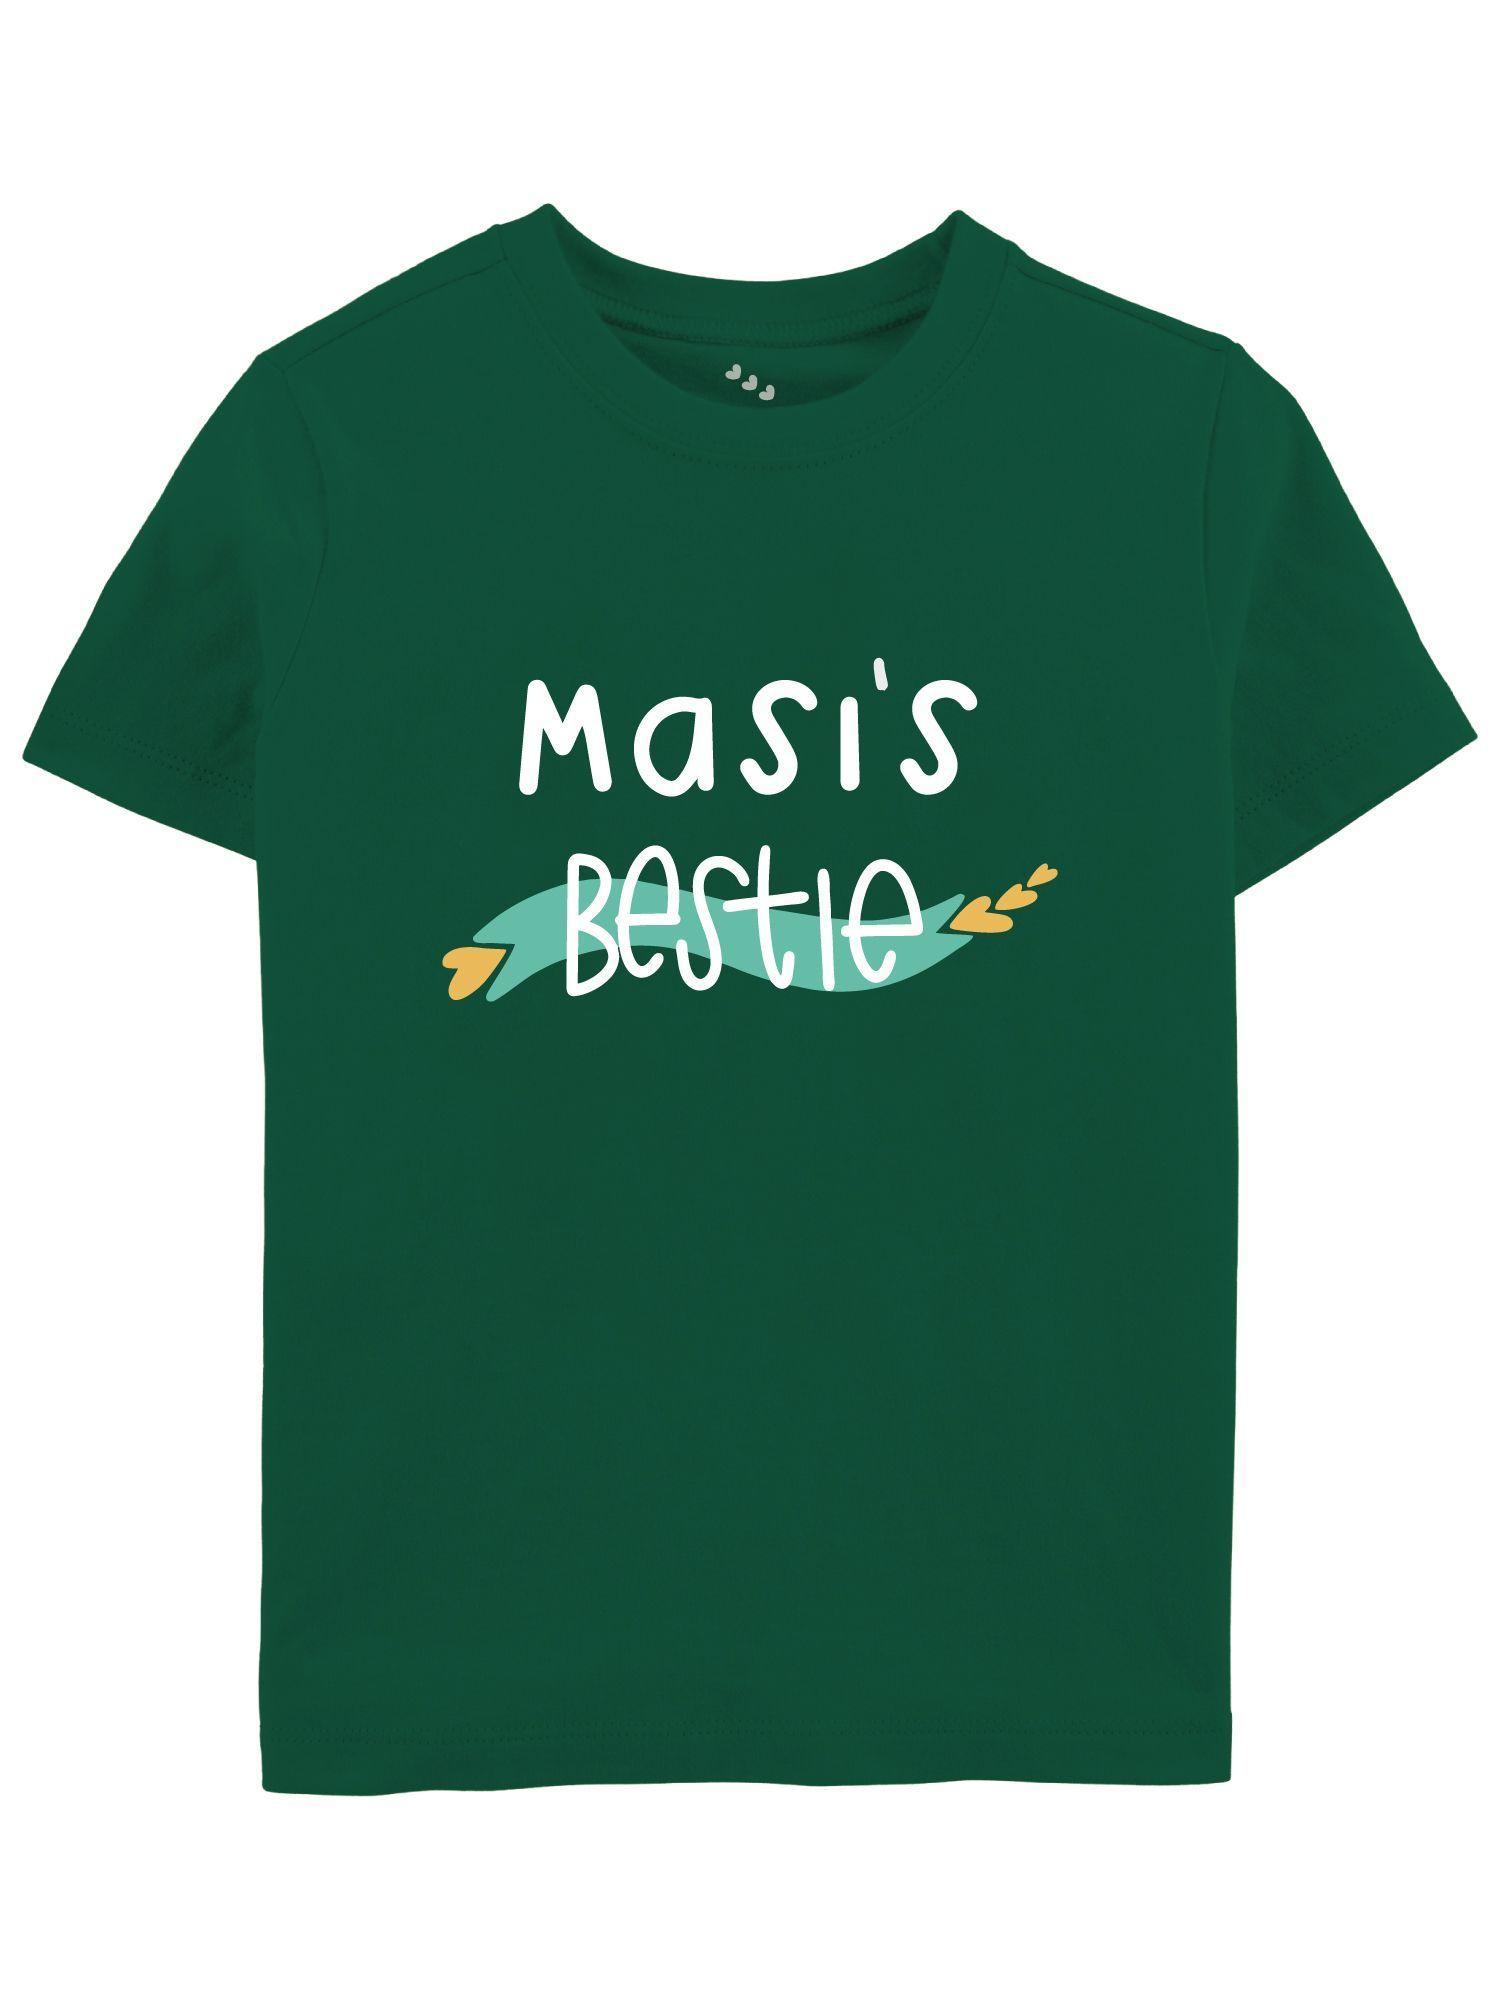 masis bestie kids t-shirt jersey clothes masi & baby theme